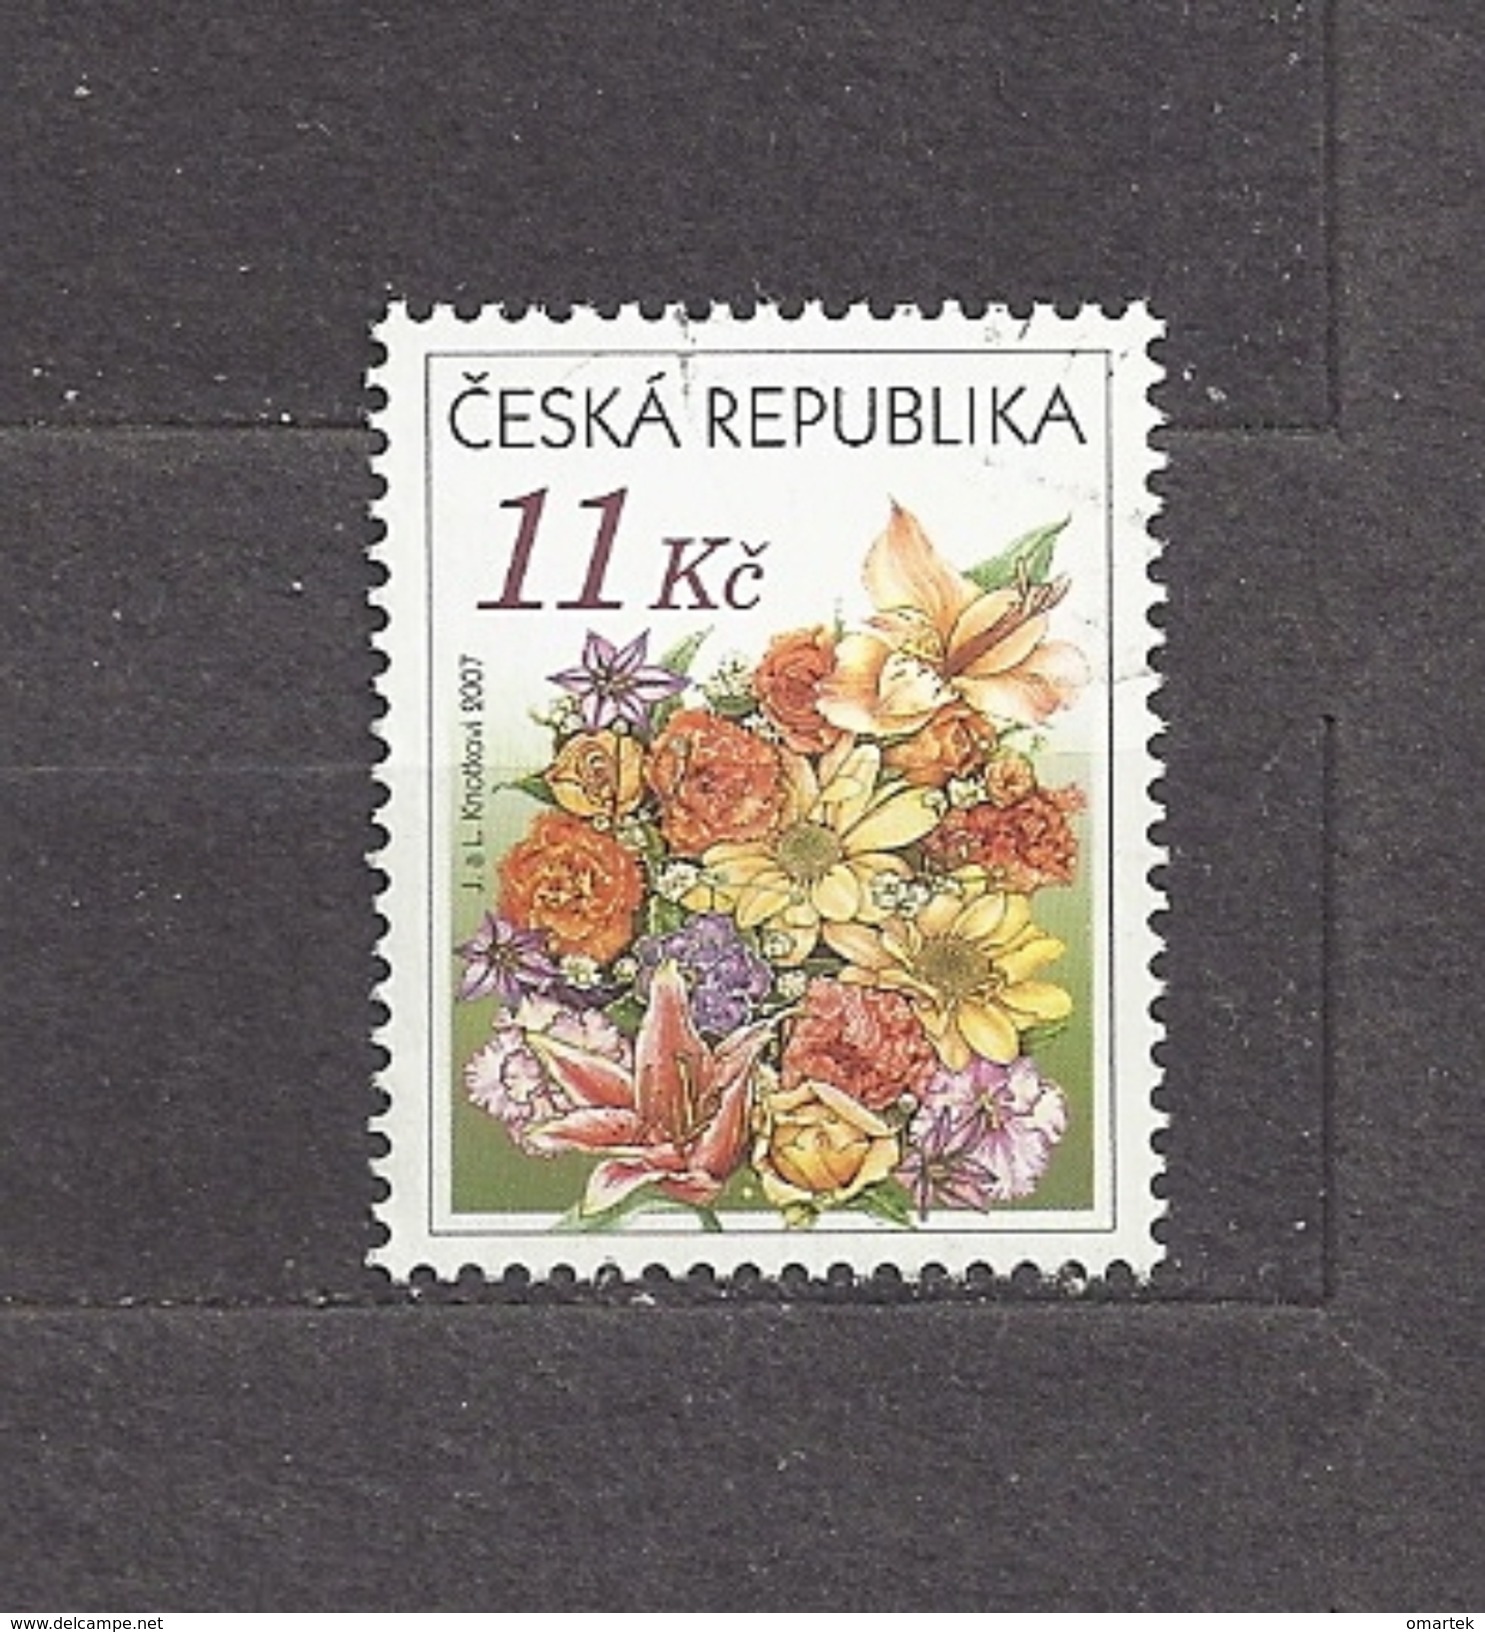 Czech Republic Tschechische Republik 2007 ⊙ Mi 510 Sc 3340 Flowers  Congratulation Bouquet. Day Of Issue:  26.3.2007. - Oblitérés